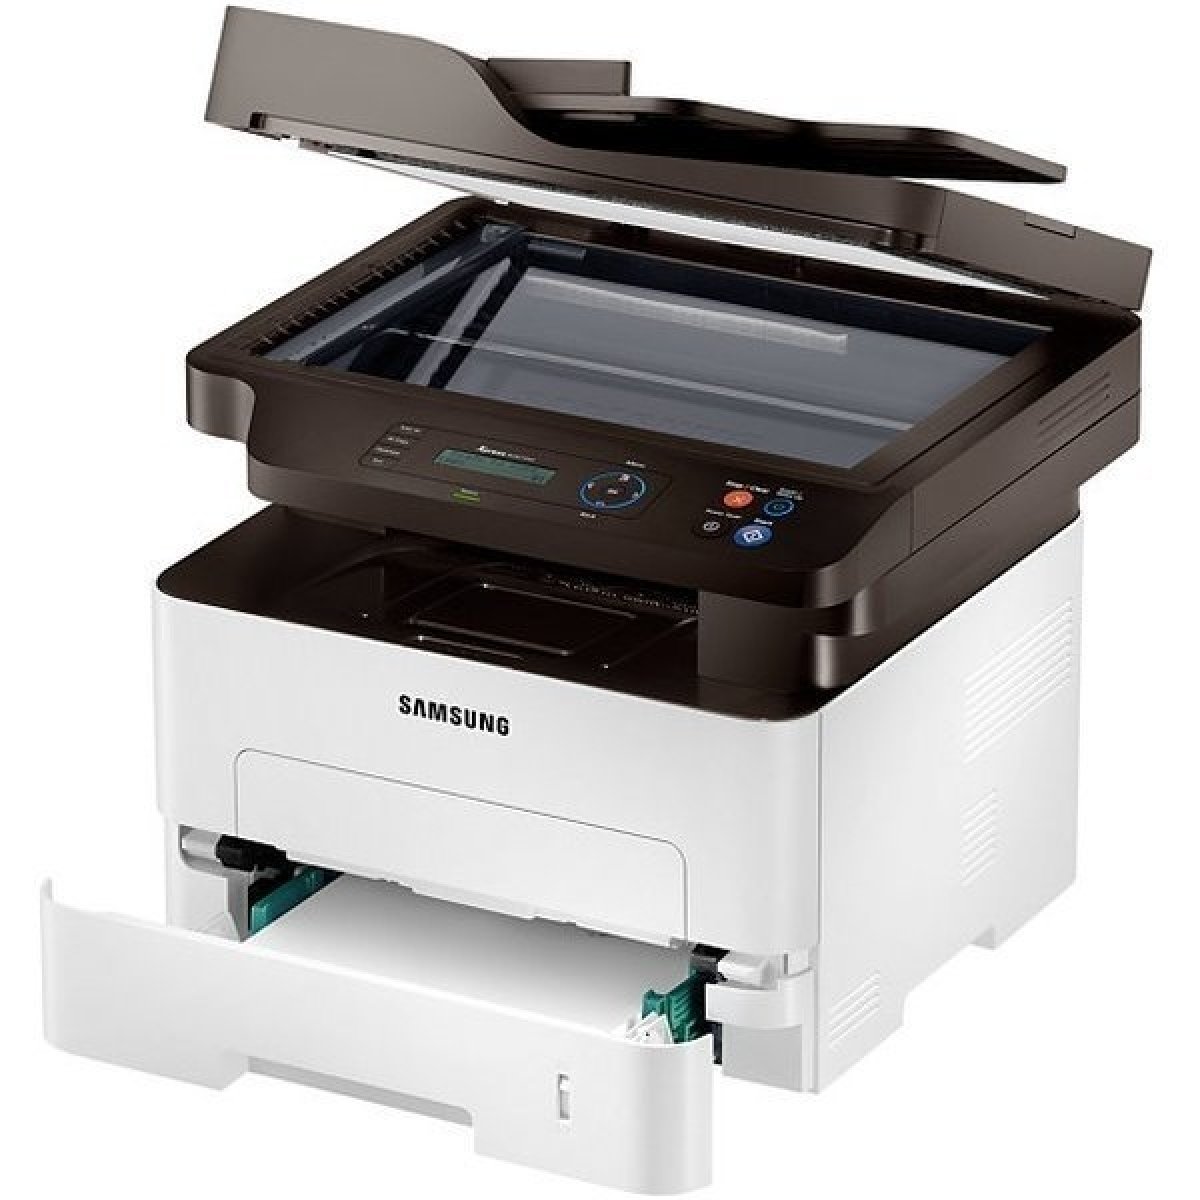 Tiskárna, skener a kopírka v jednom